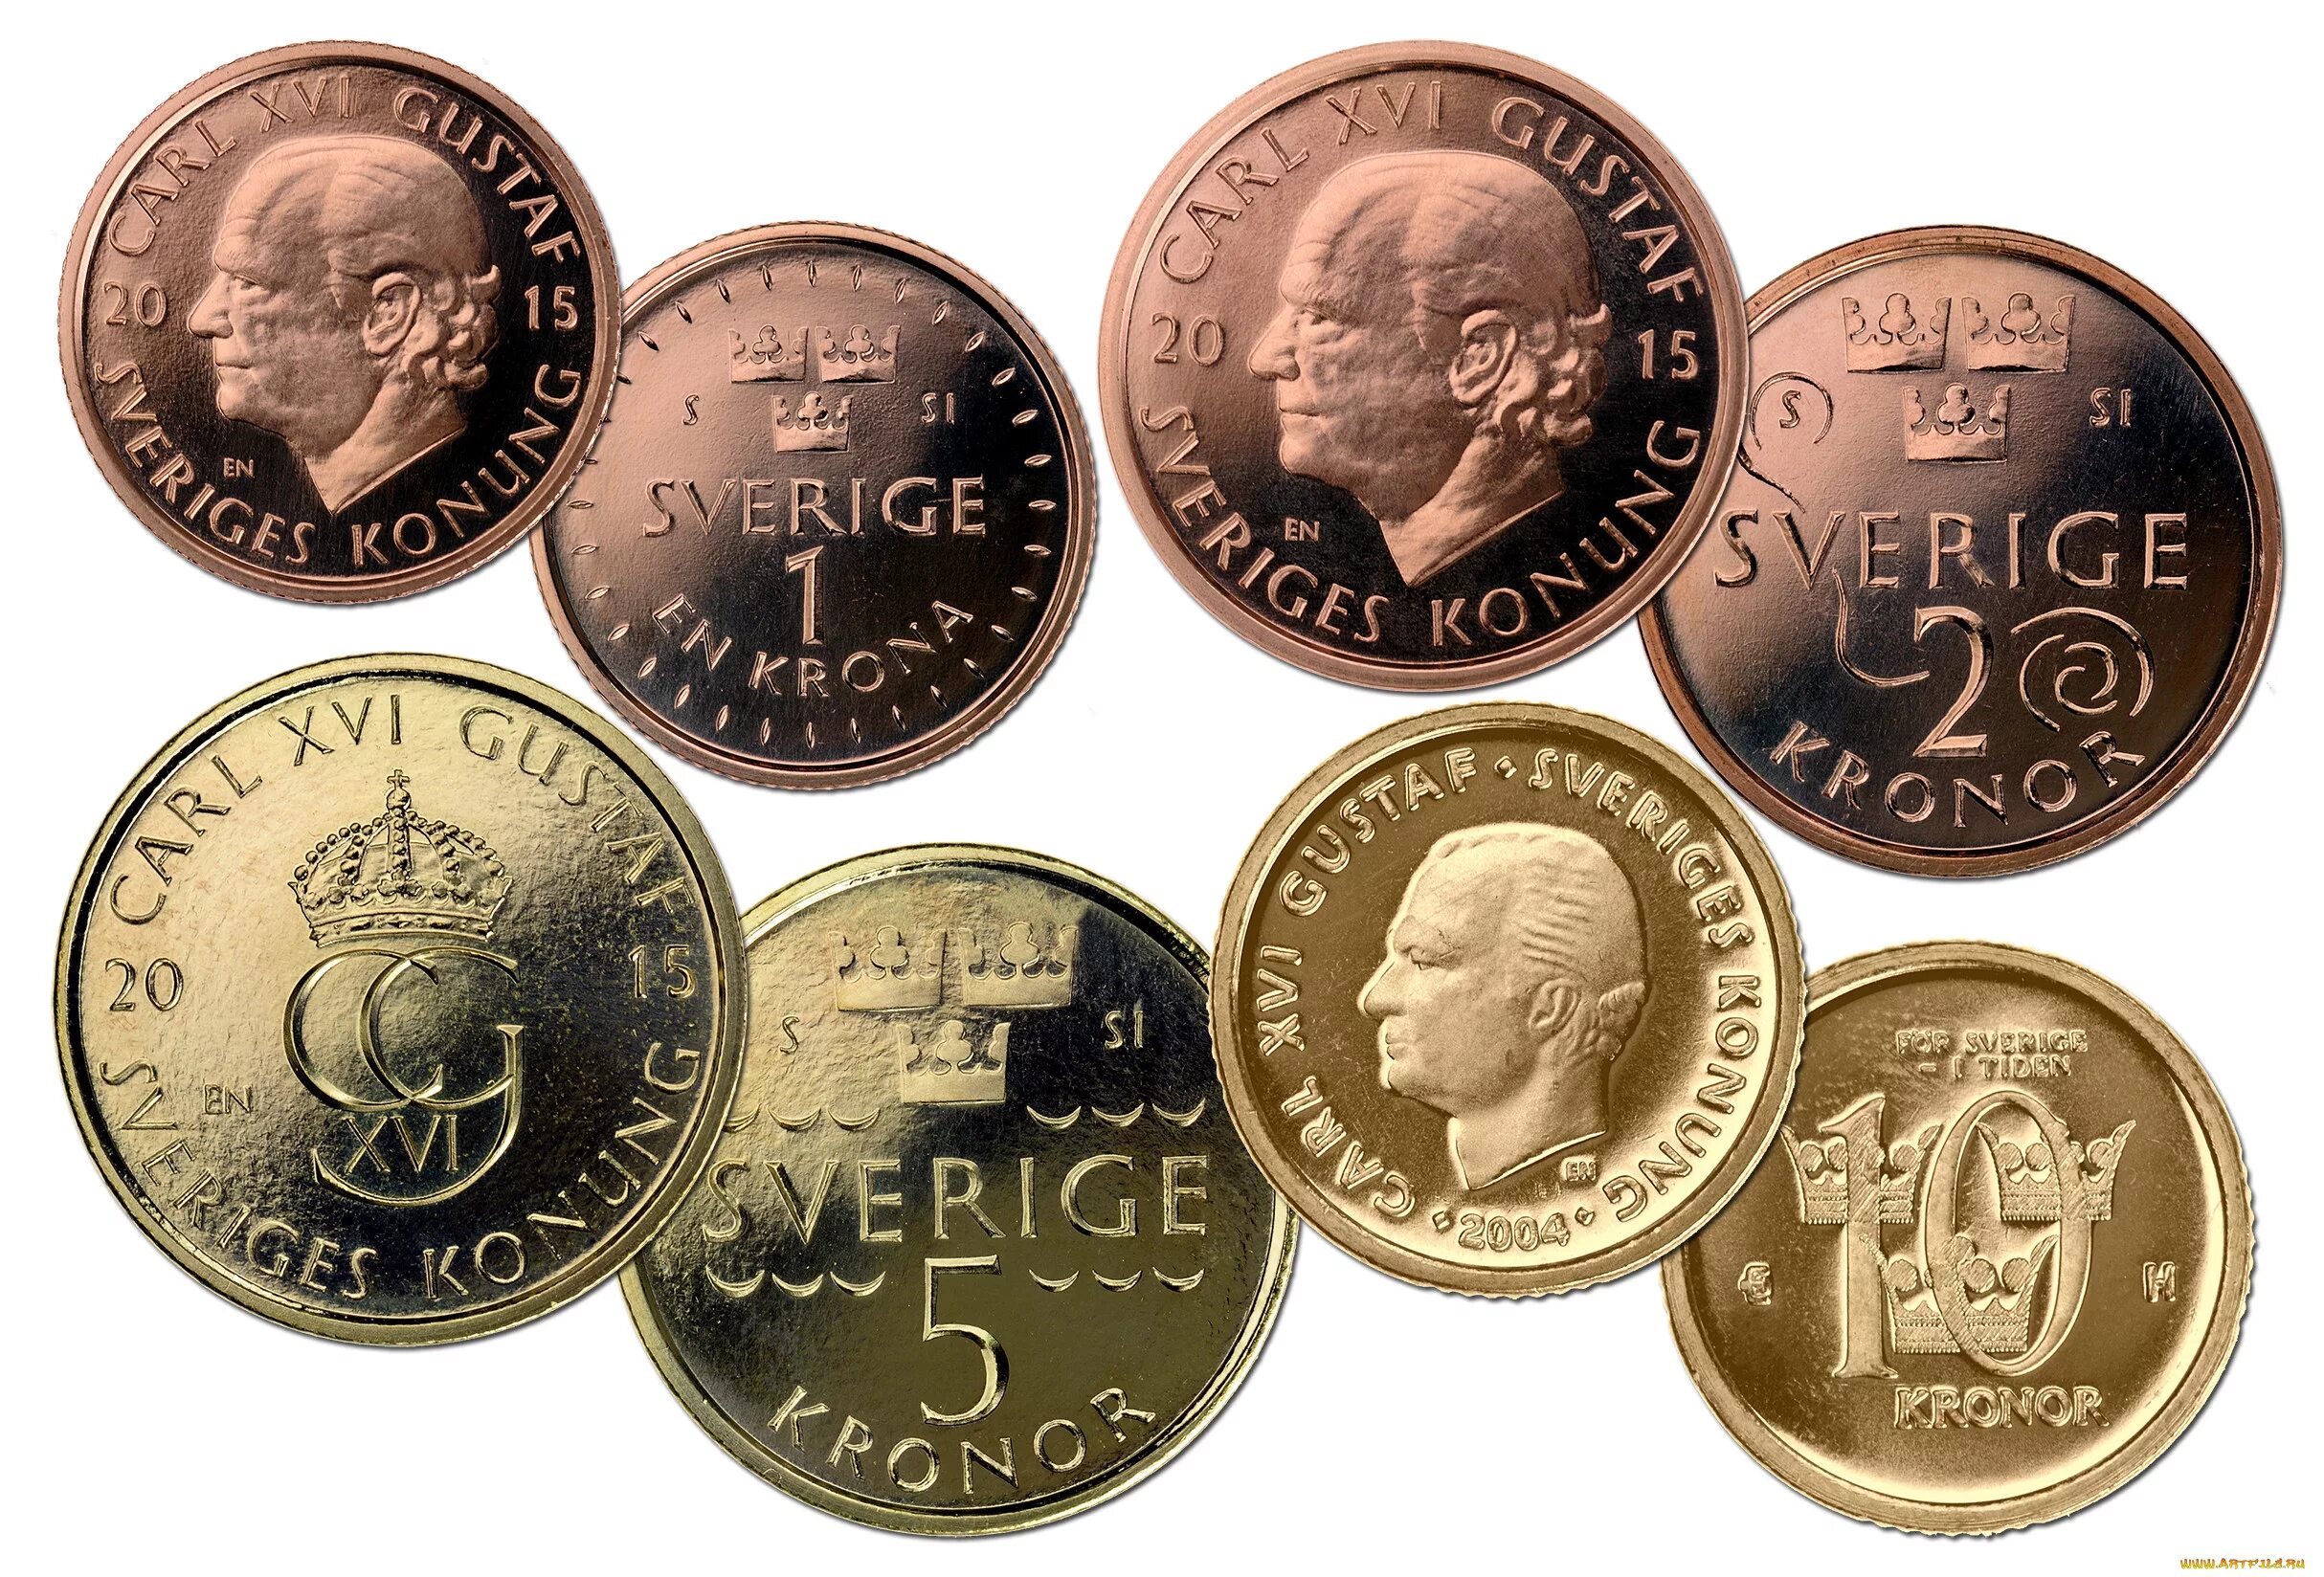 Шведская денежная единица. Шведская крона. Крона денежная единица Швеции. Шведская крона монета. Шведские кроны монеты.